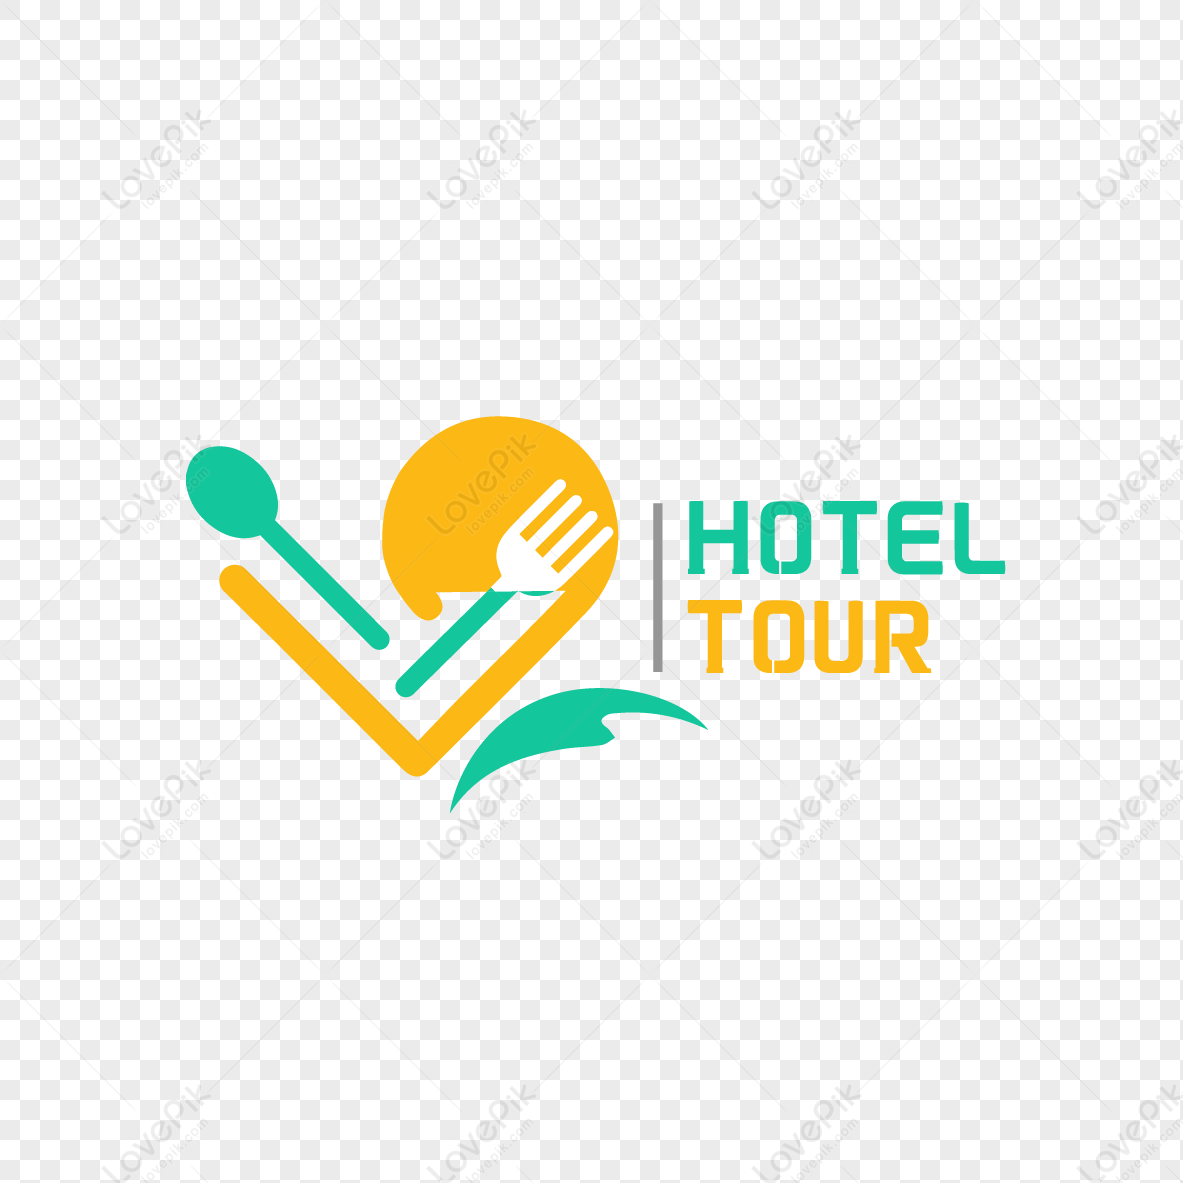 Hotel travel logo, logo, simplicity, travel logo png free download